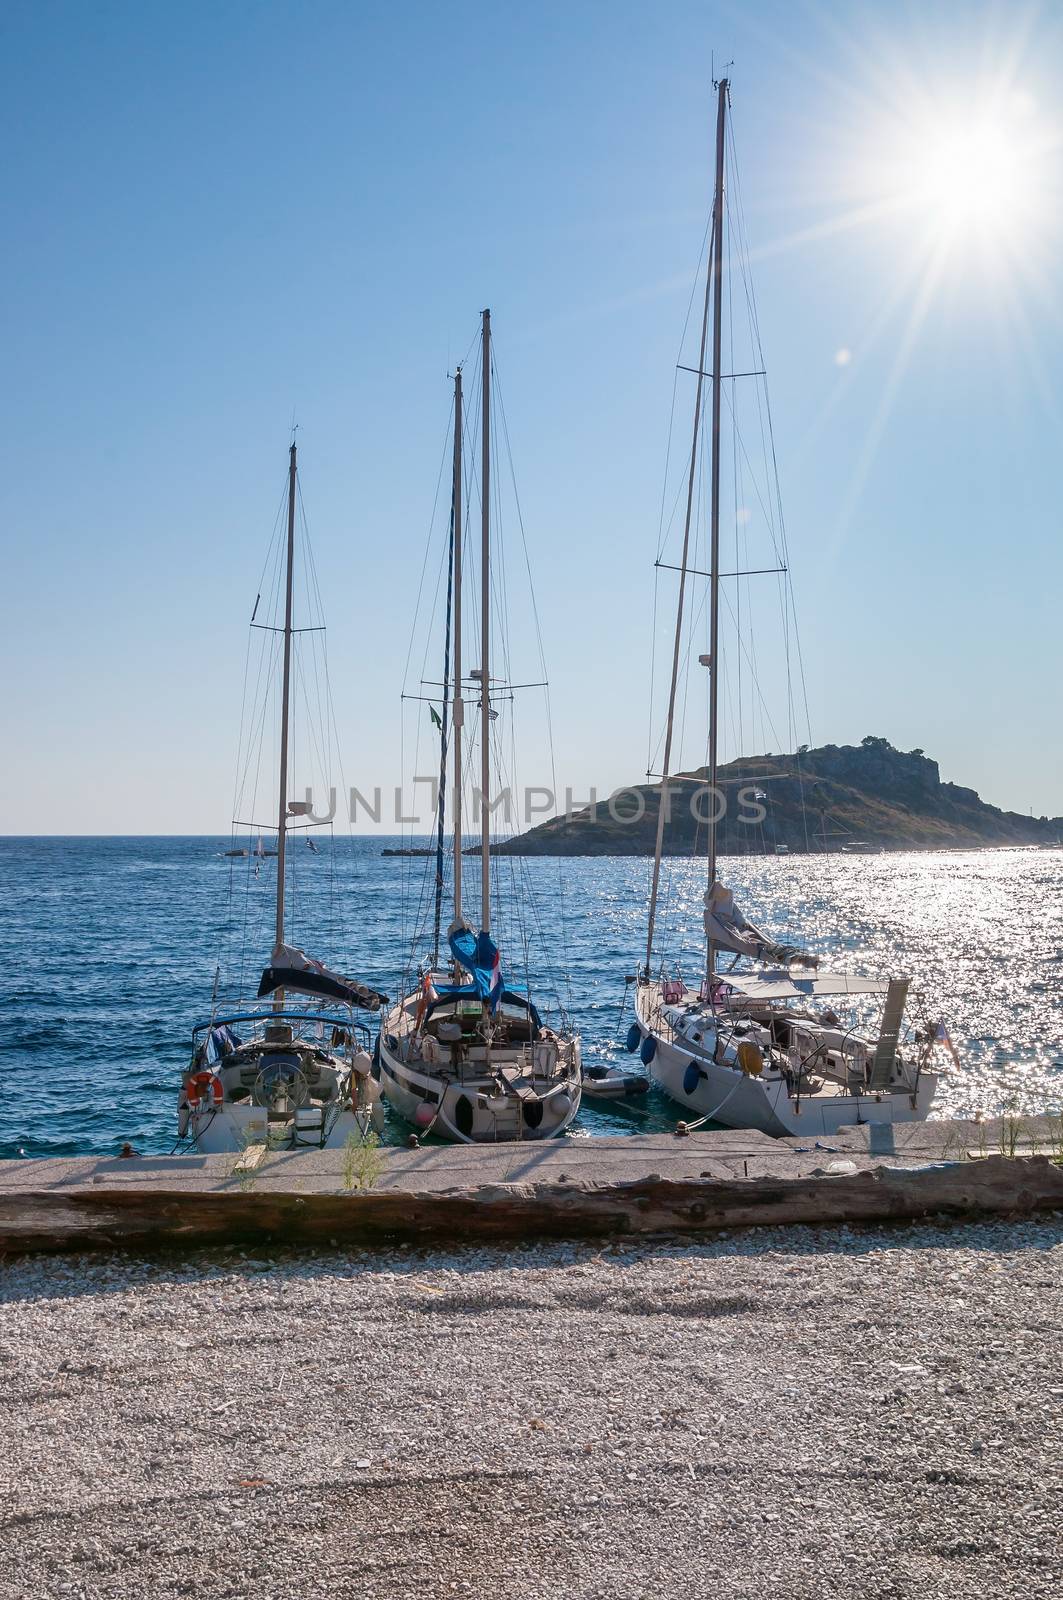 Yachts moored at Agios Nikolaos port, Zakynthos by mkos83